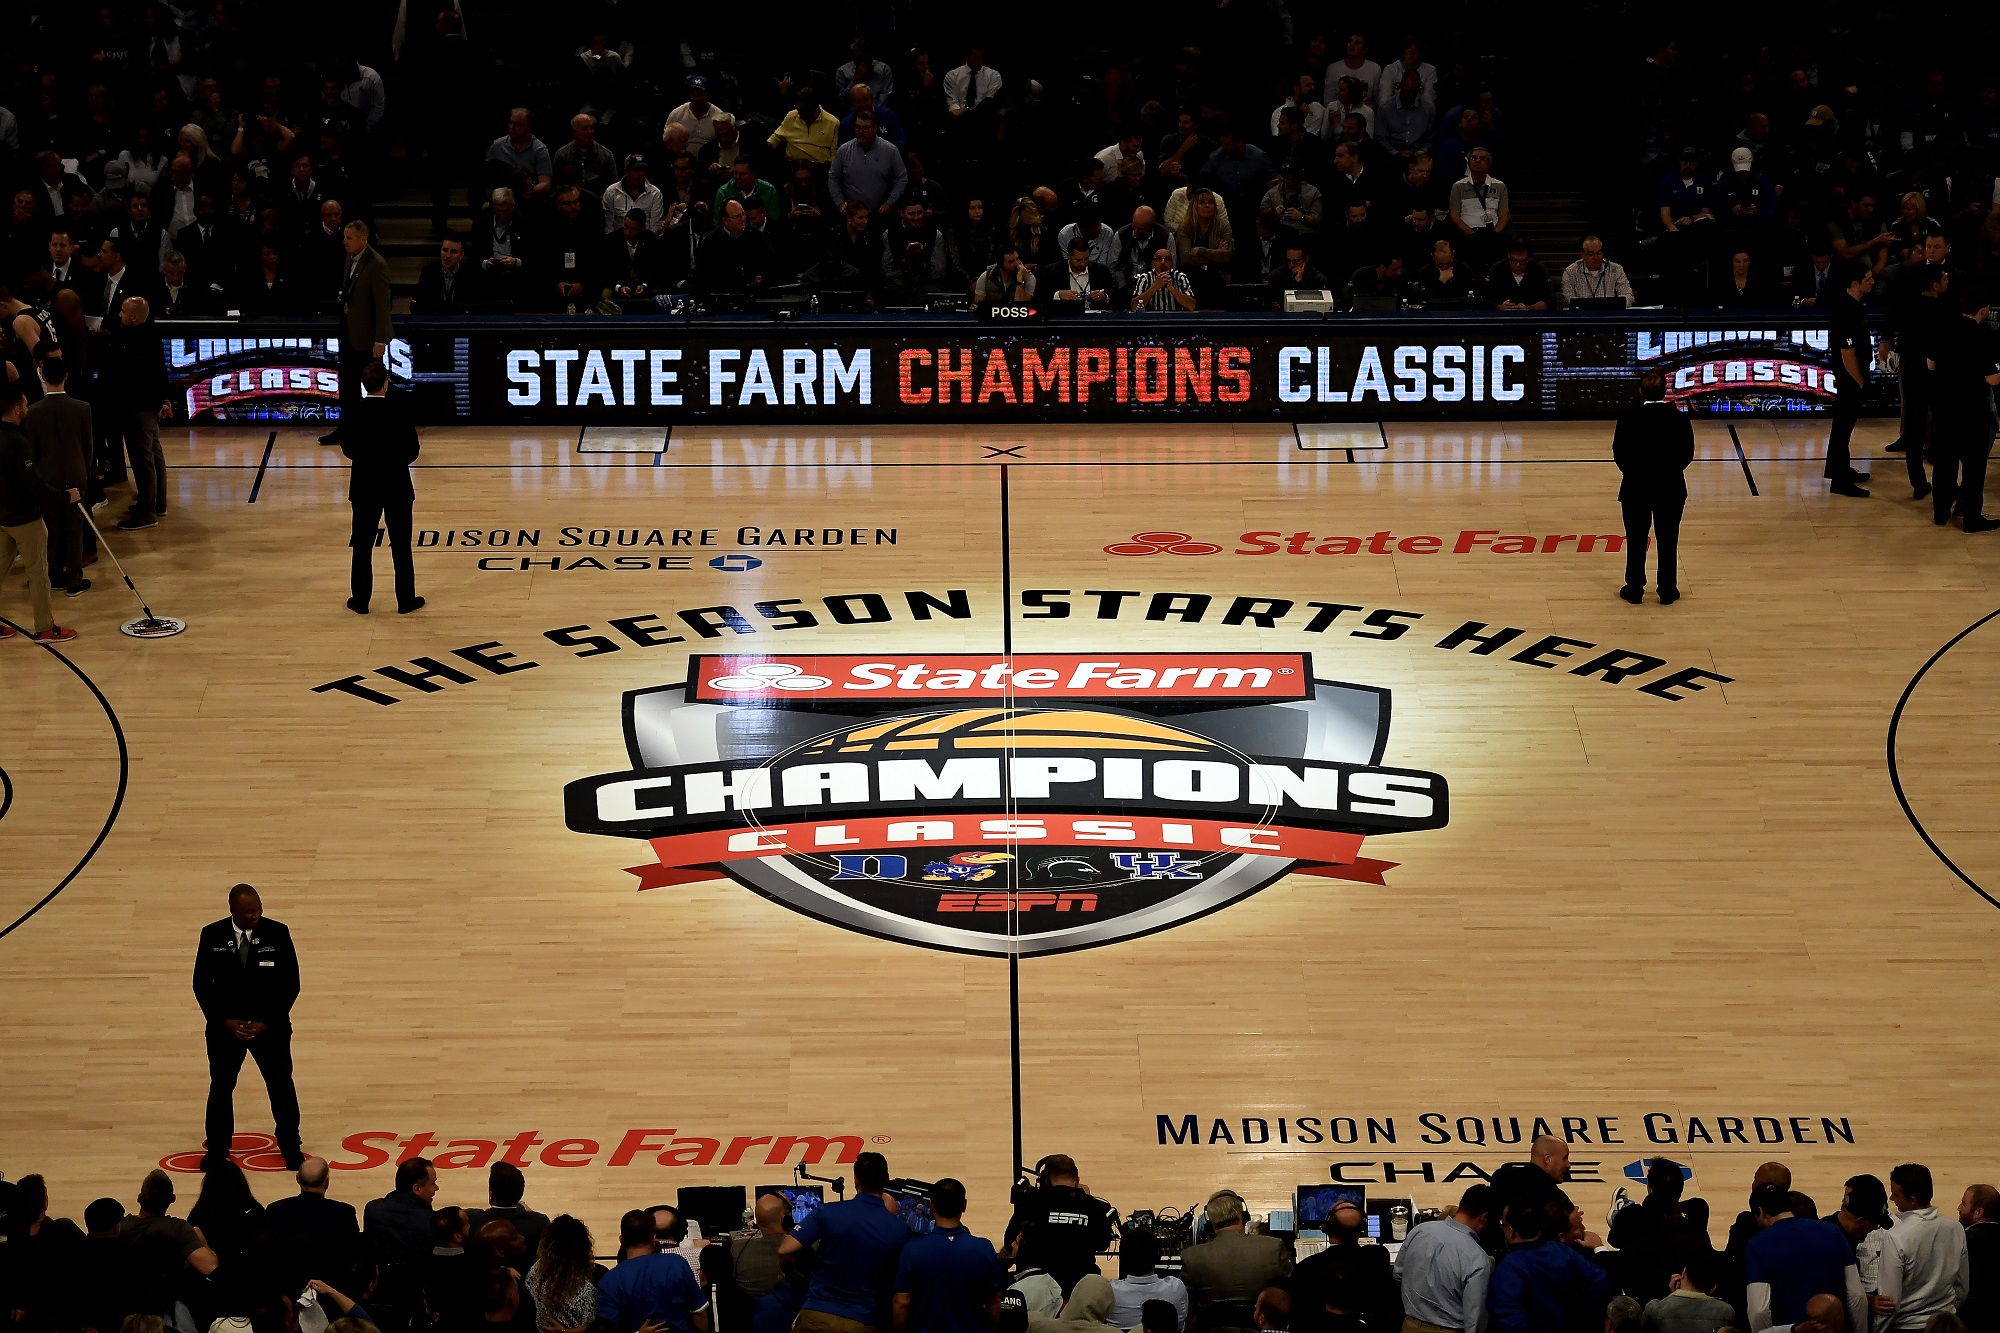 State Farm Champions Classic